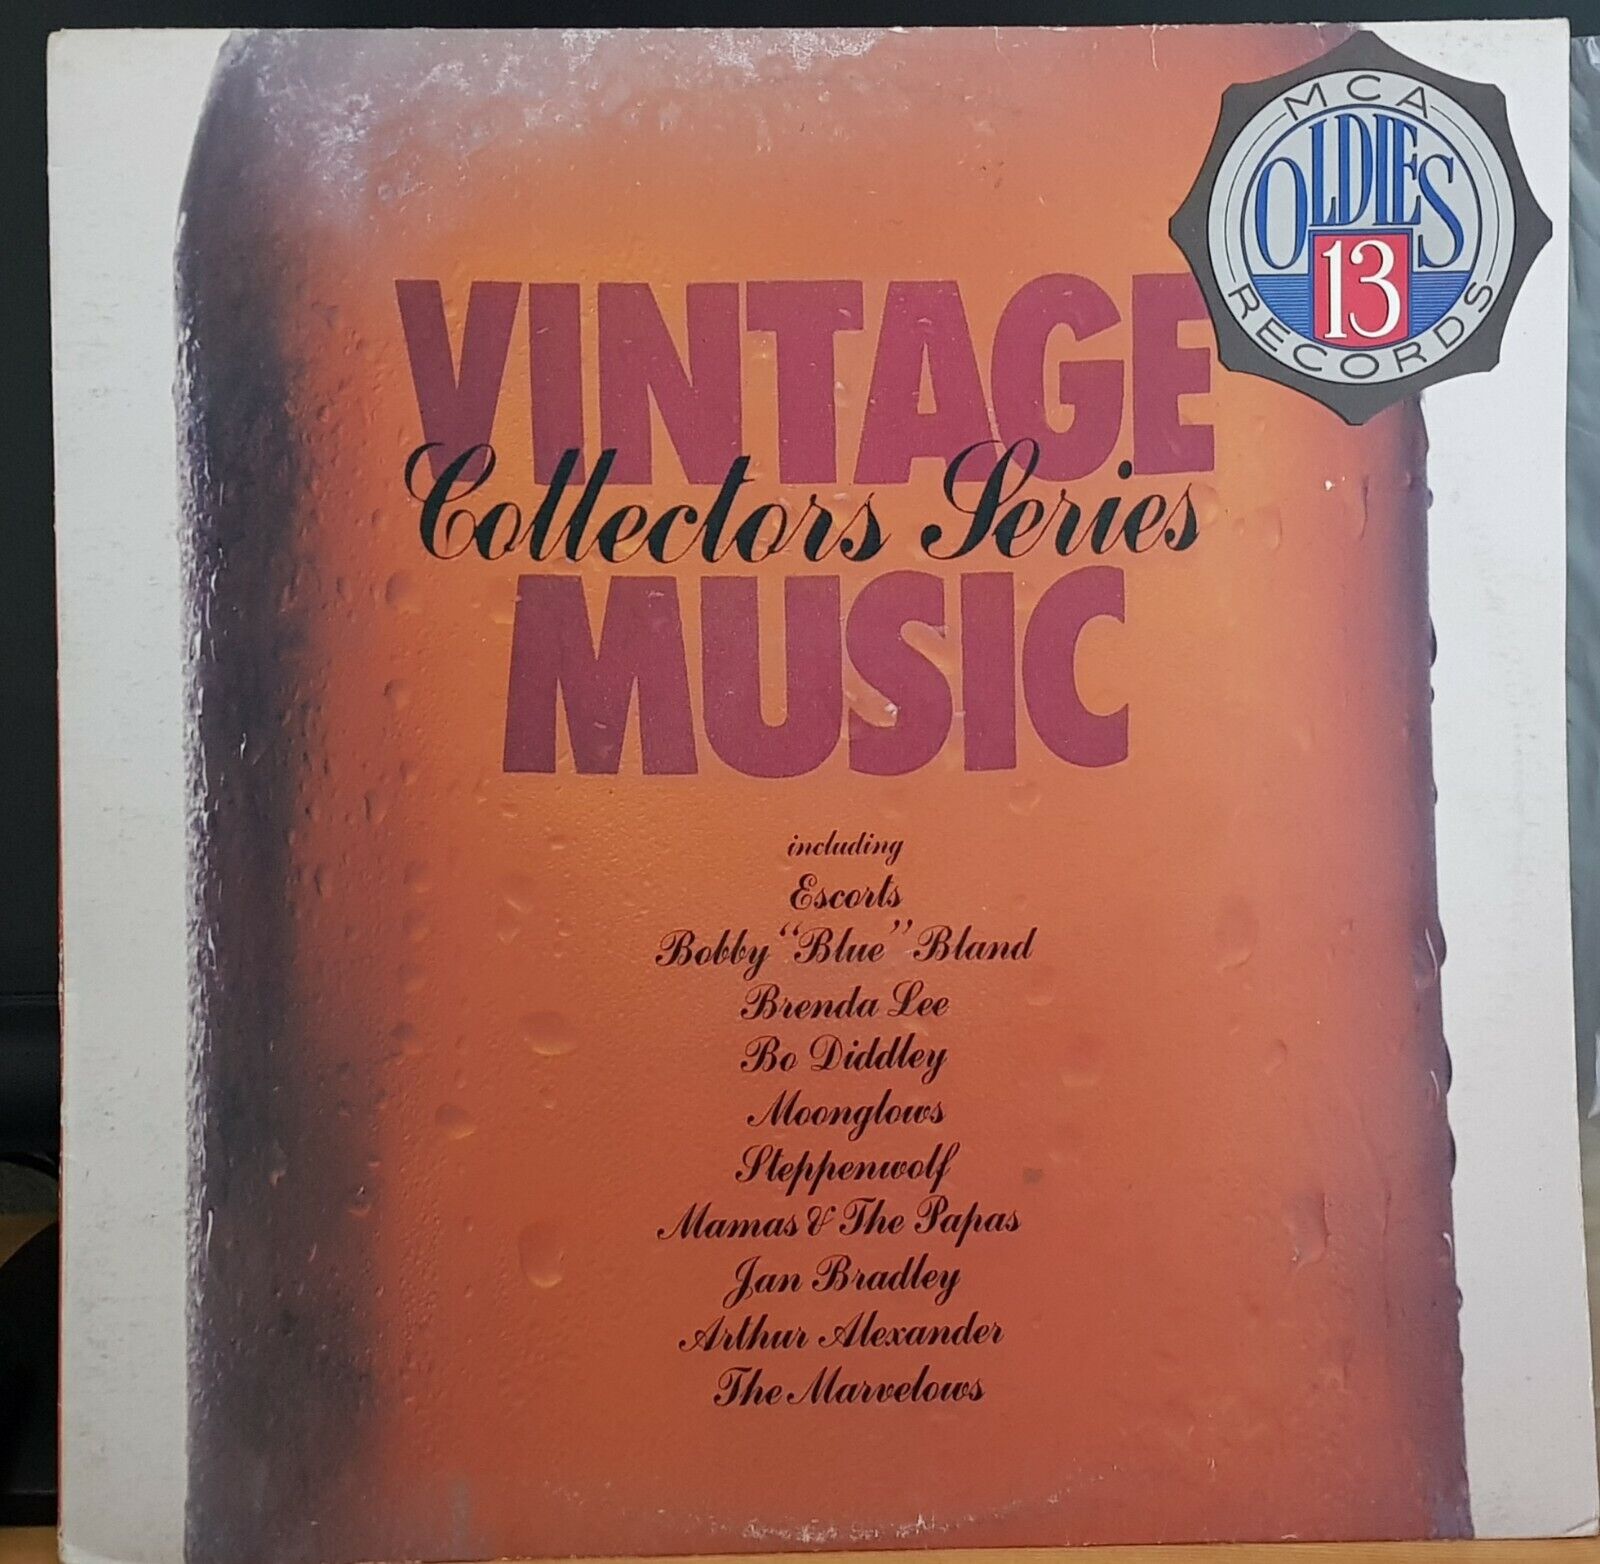 Various – Vintage Music Collectors Series 13 - '86 LP record excellent, cover VG